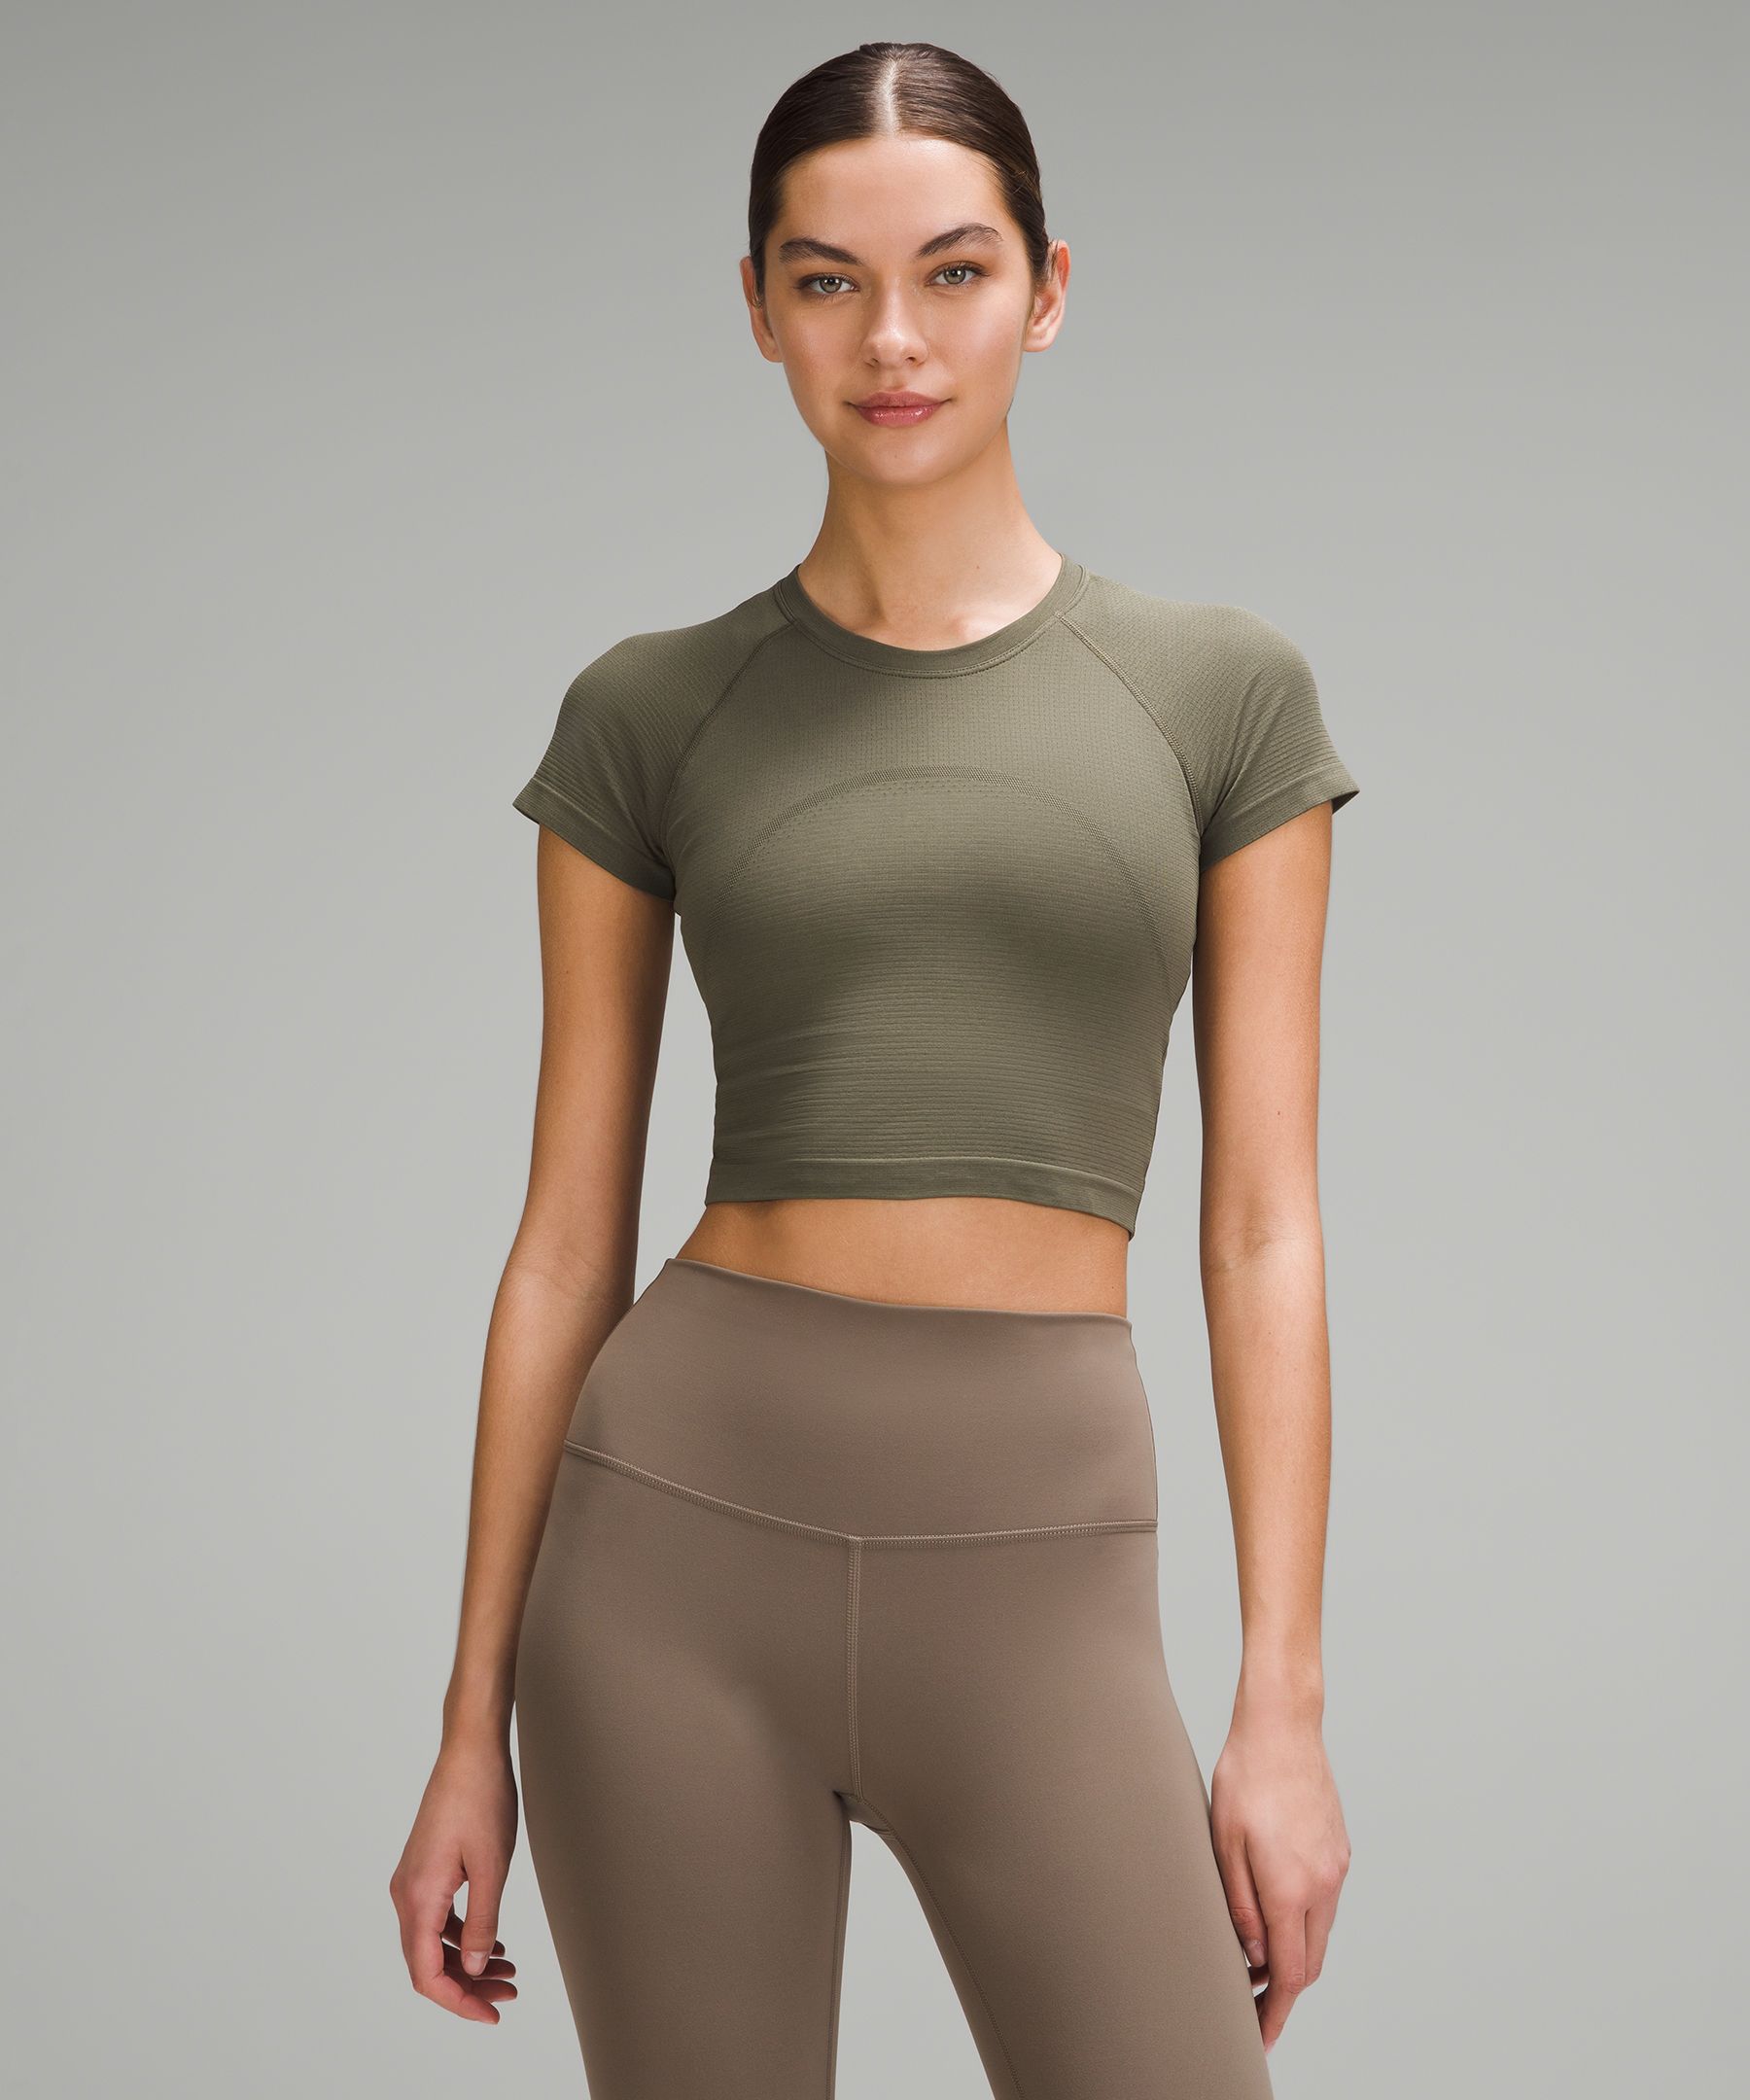 Lululemon athletica Swiftly Tech Long-Sleeve Shirt 2.0, Women's Long Sleeve  Shirts